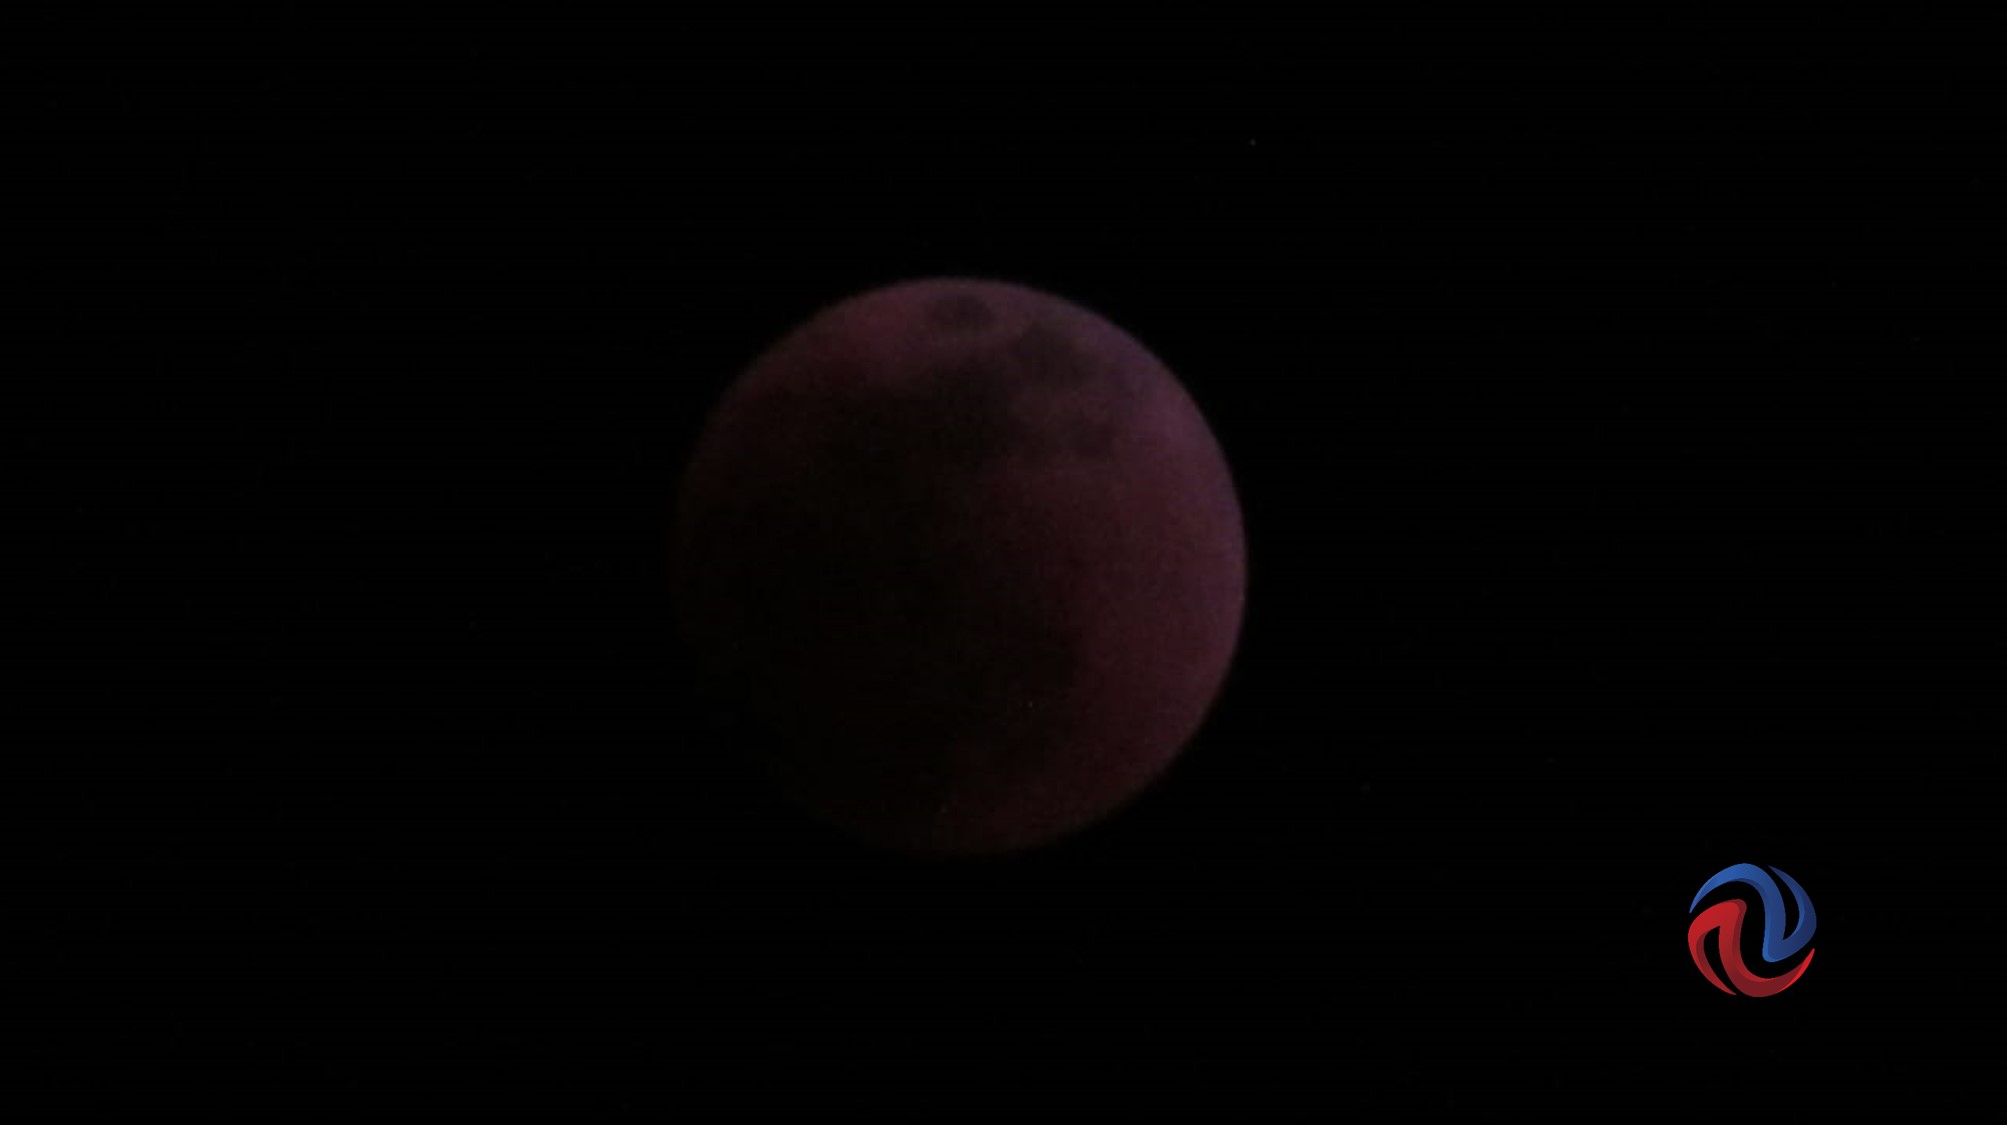 Ocurre eclipse total de luna en el cielo de Tijuana